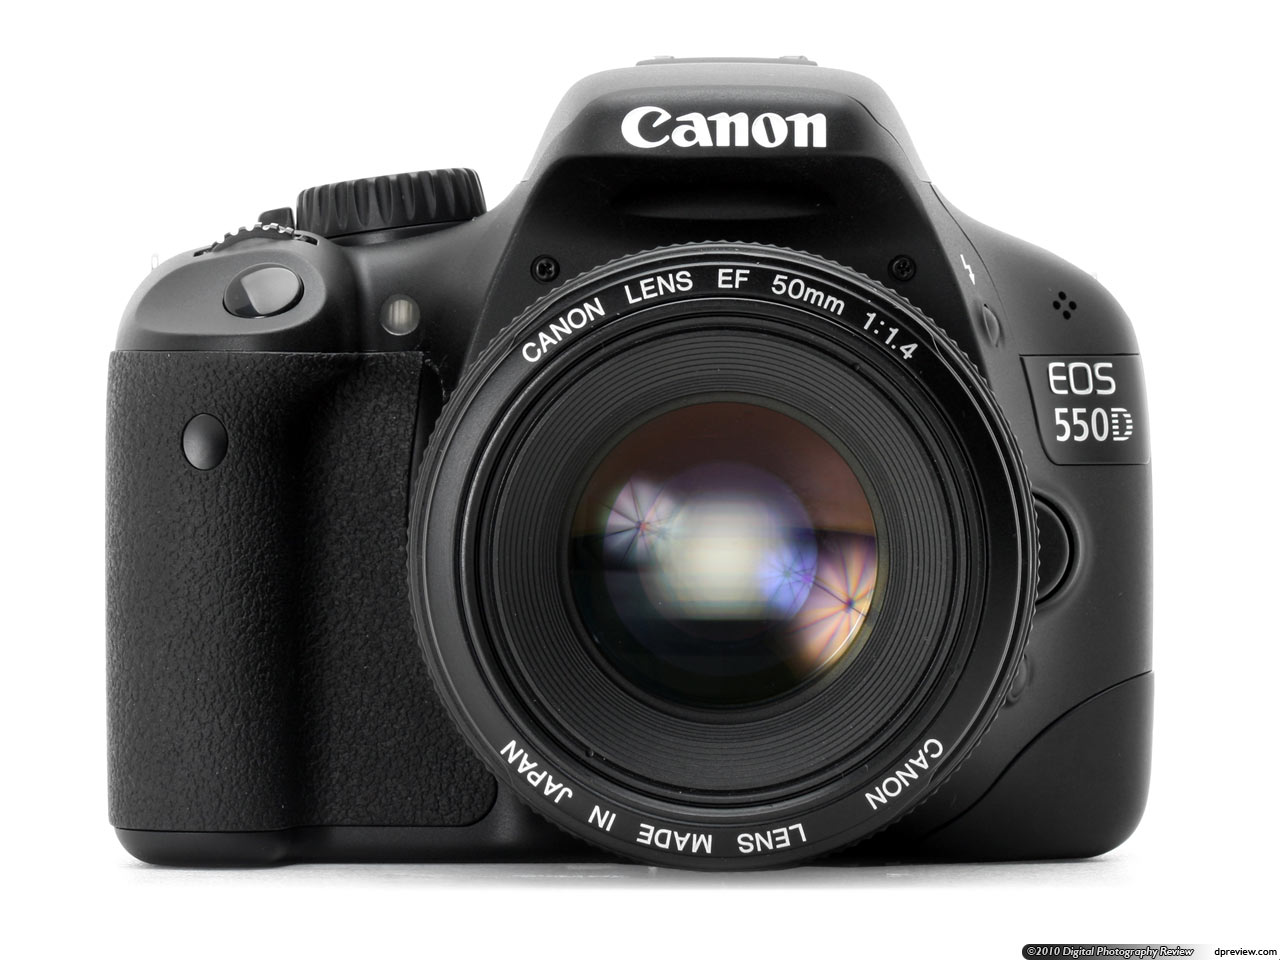  Canon  EOS  550D Rebel  T2i  Kiss X4 Digital In depth 